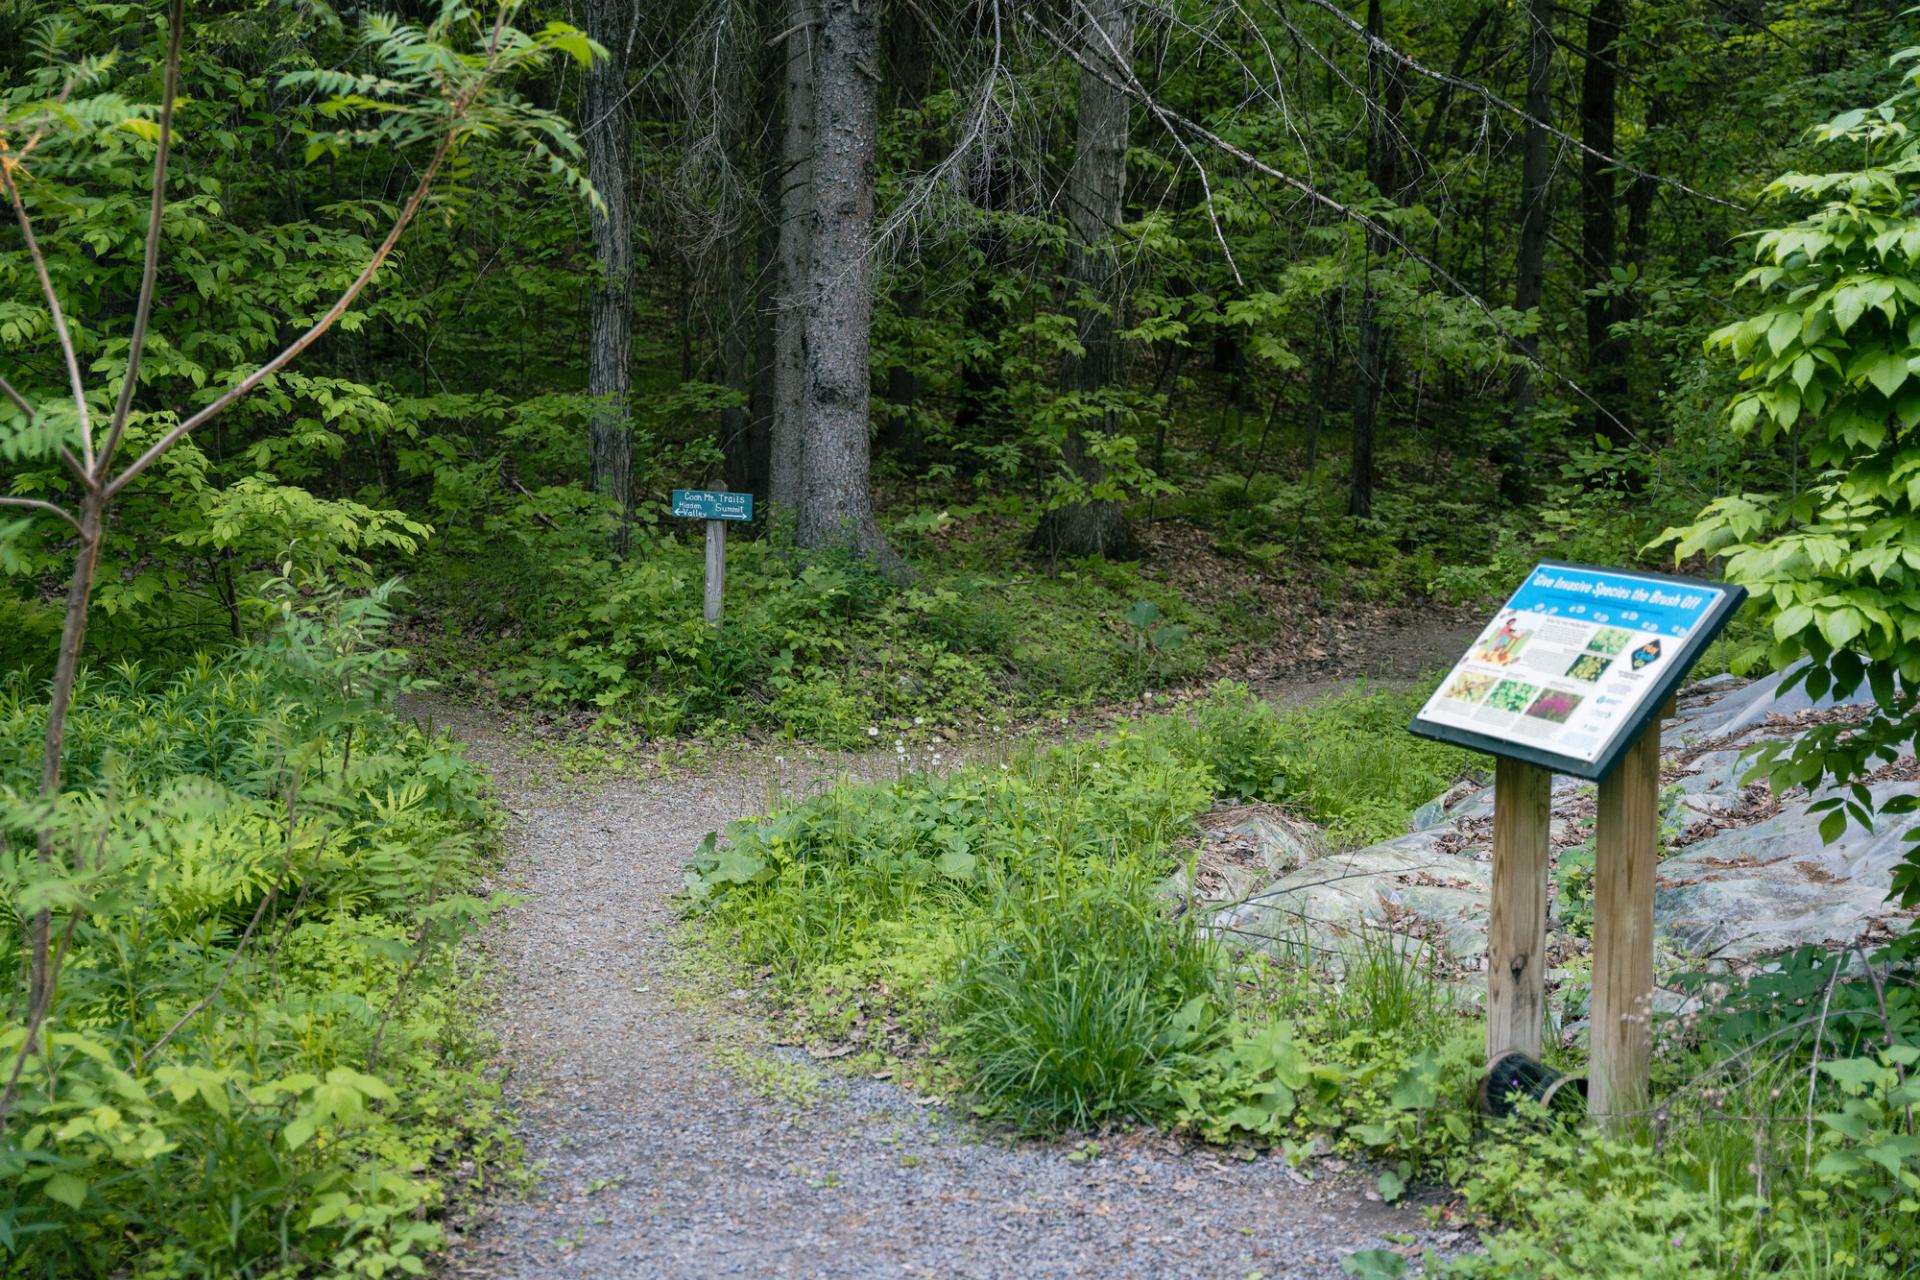 An interpretive sign next to a trail